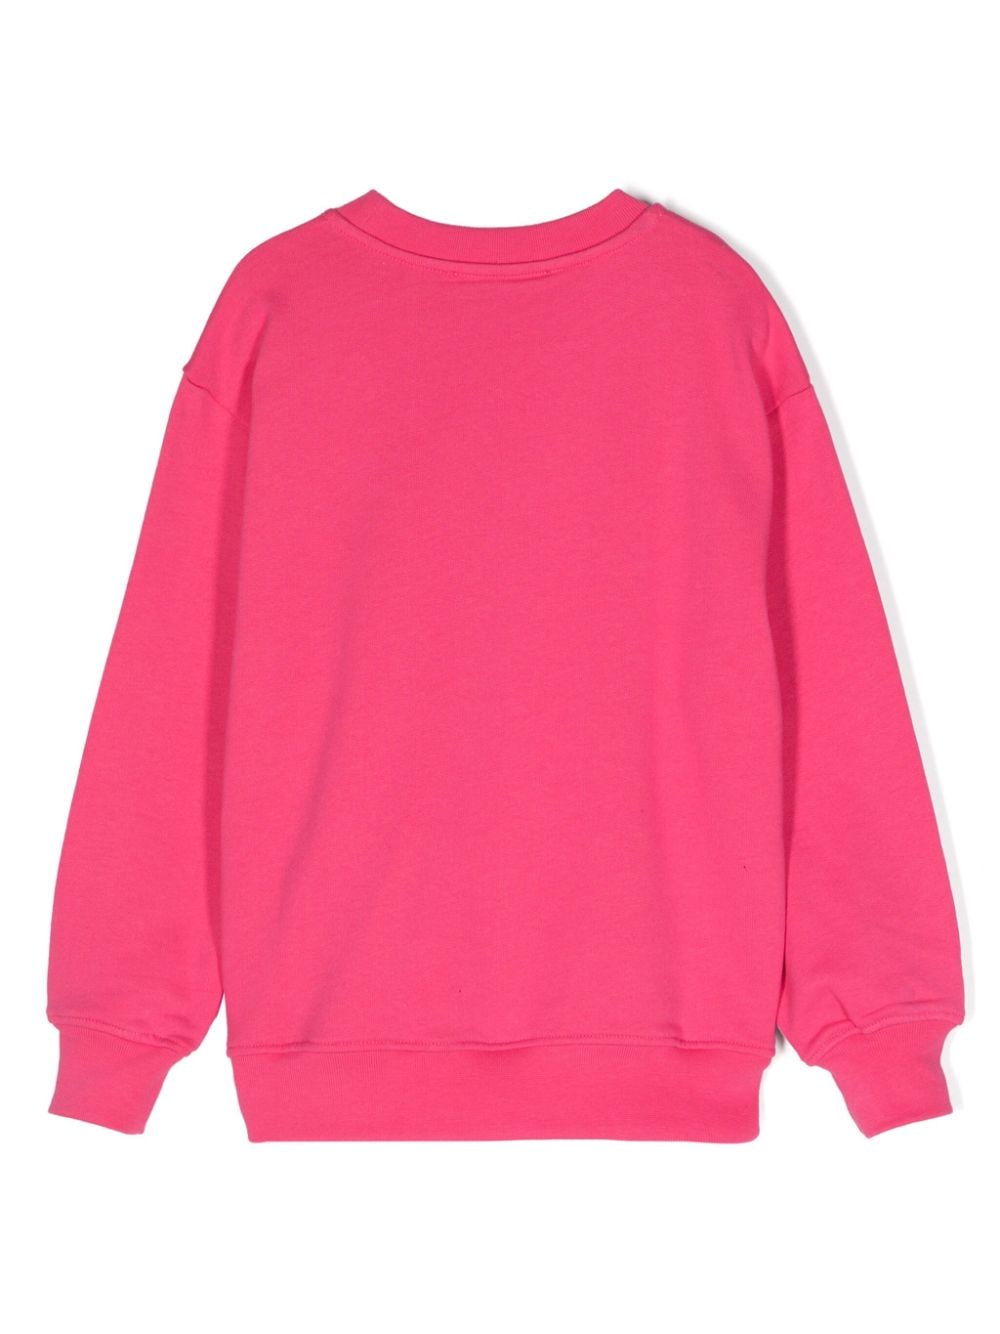 MSGM Kids Katoenen sweater met logoprint - Roze